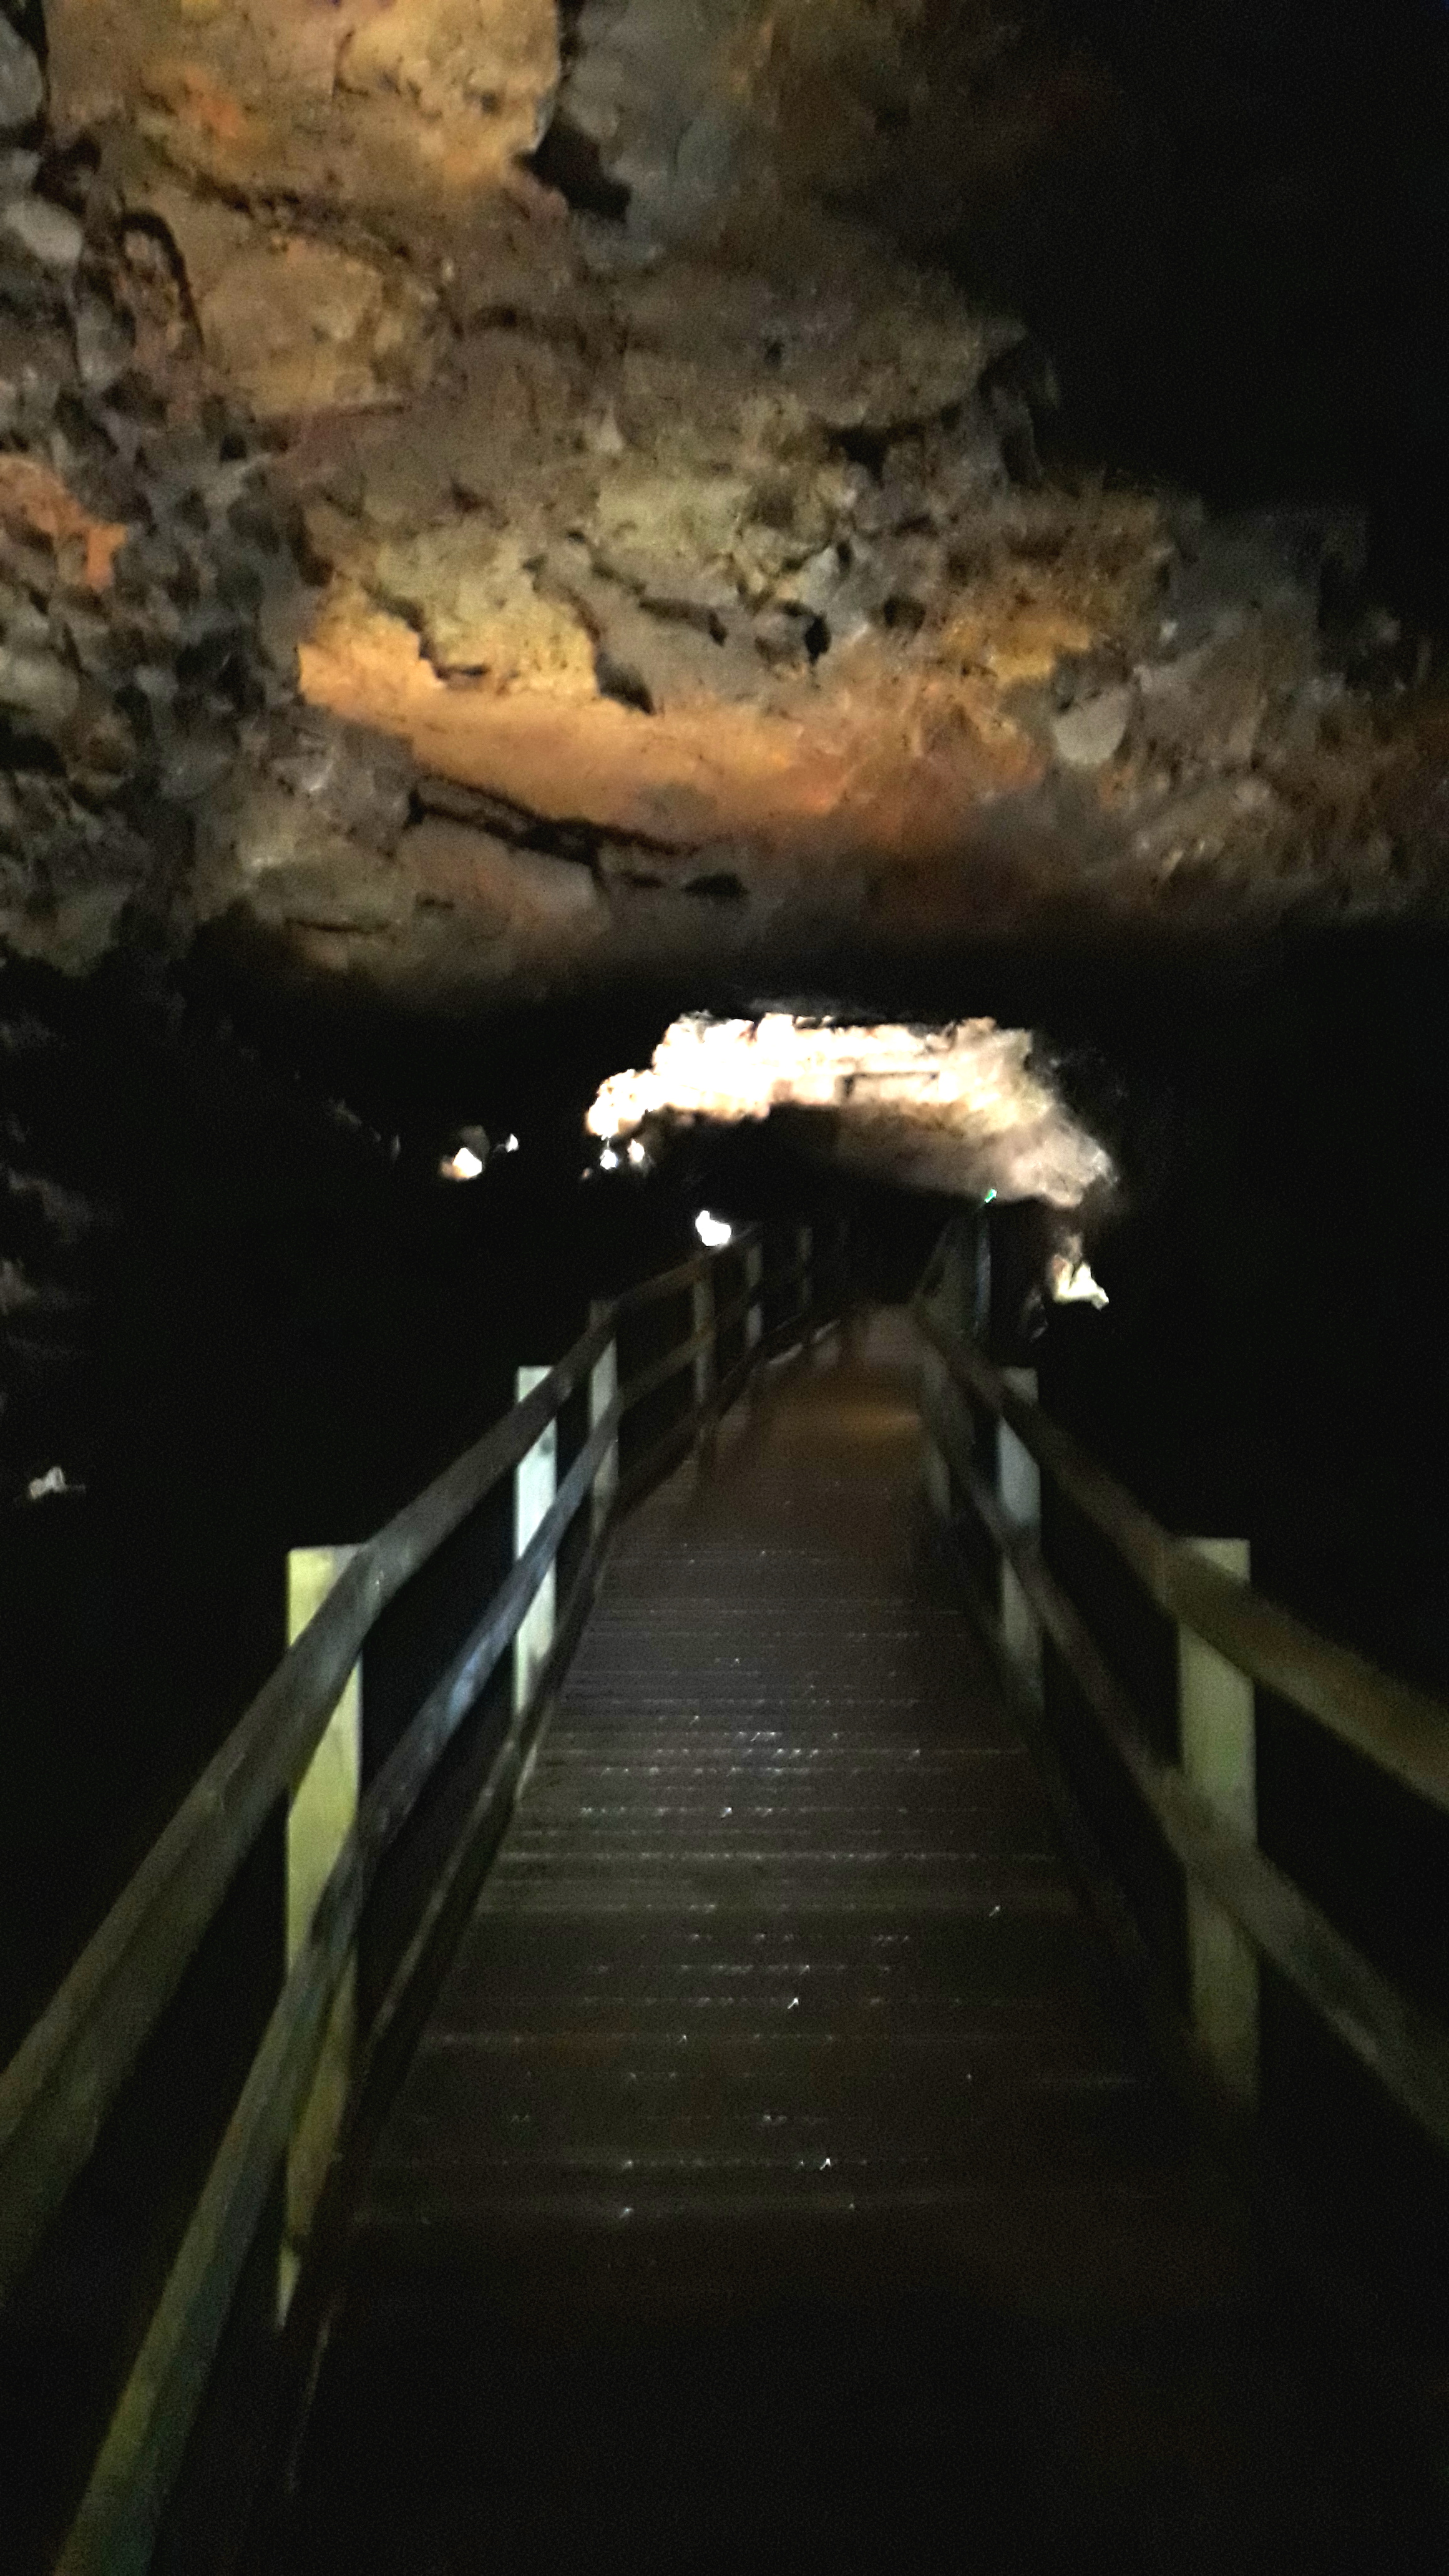 Víðgelmir lava tunnel